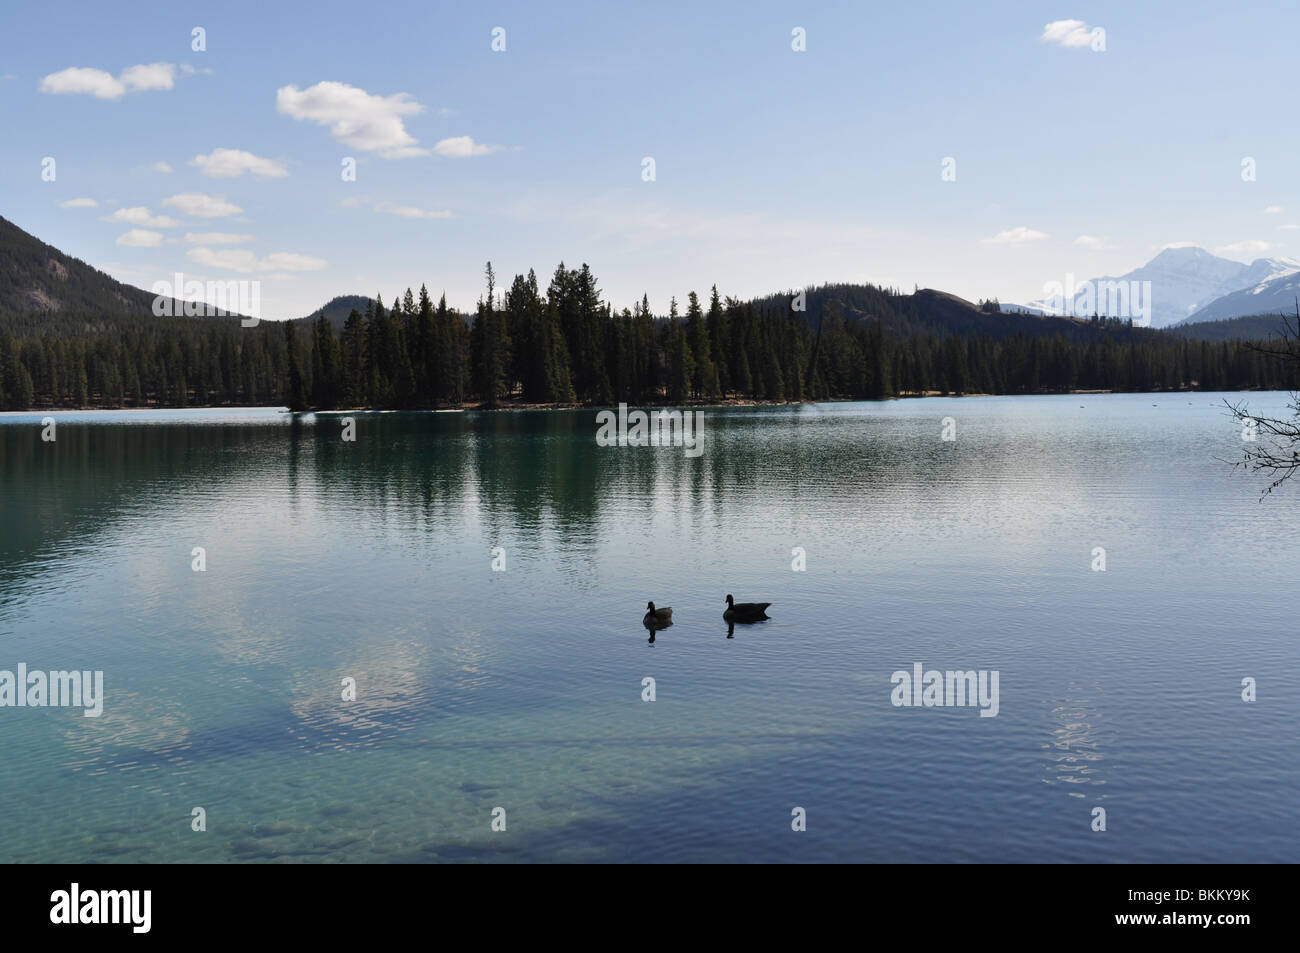 Two Ducks Crossing a calm lake. Stock Photo